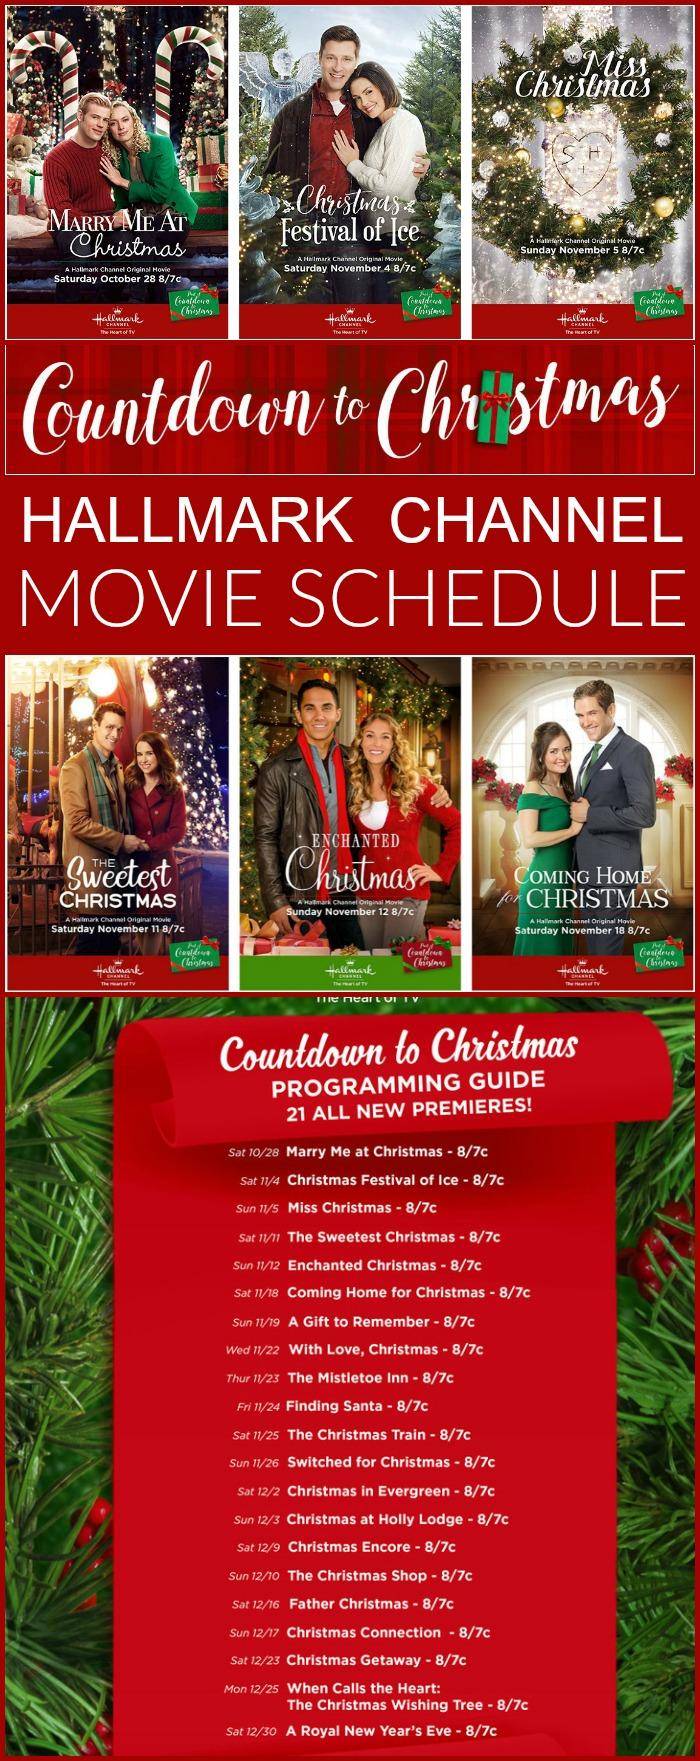 the hallmark channel "countdown to christmas" movie schedule +